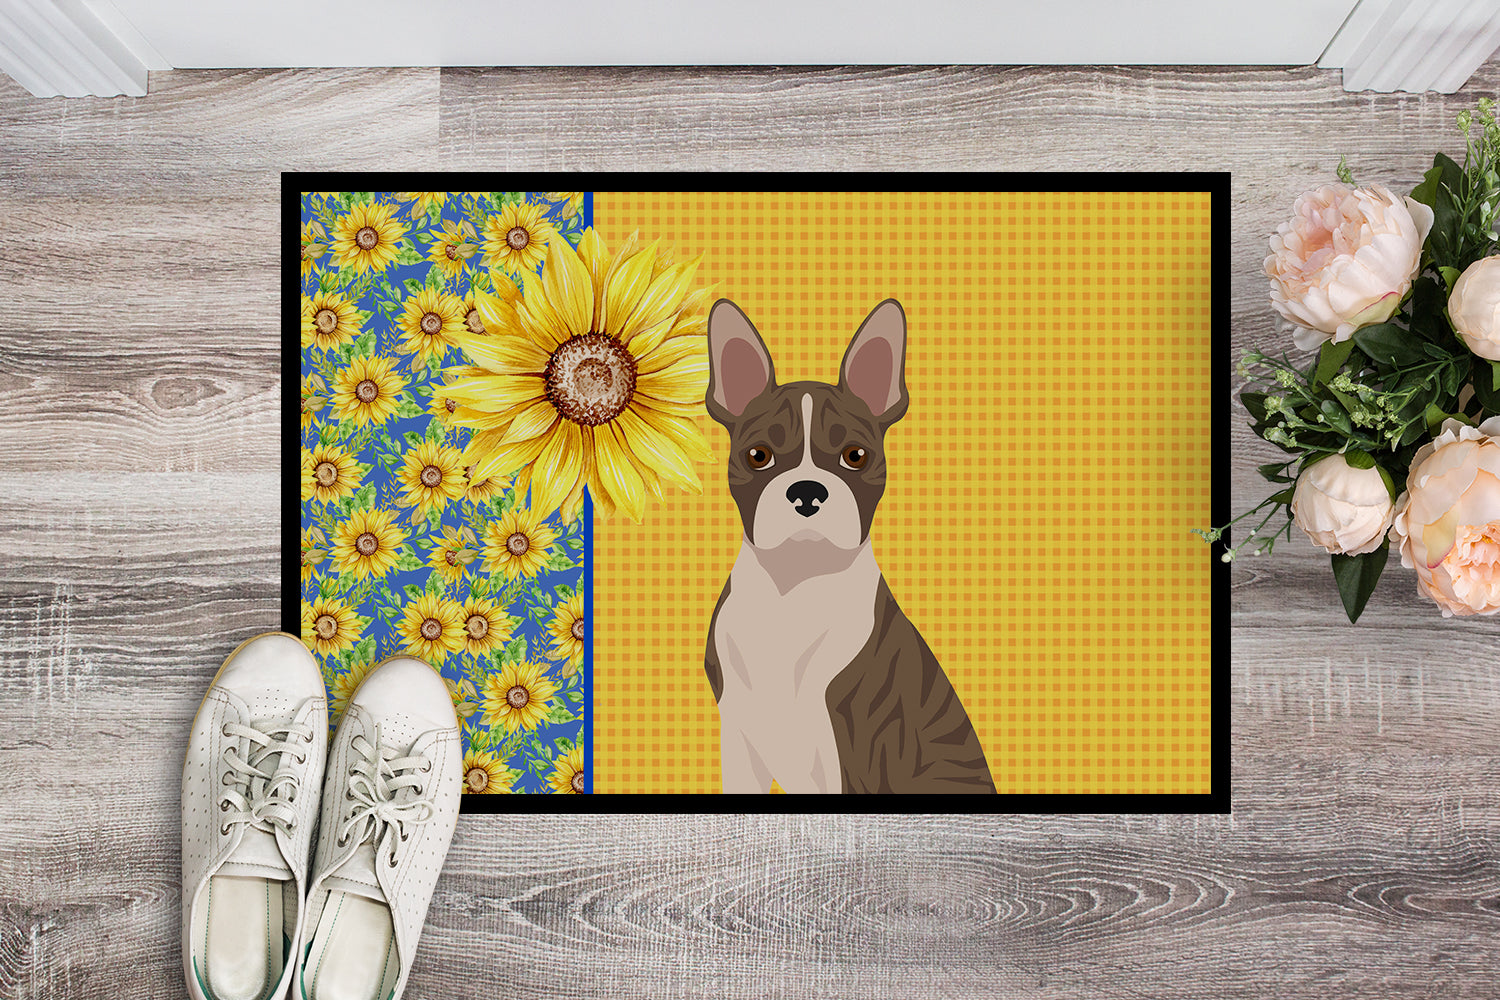 Buy this Summer Sunflowers Brindle Boston Terrier Indoor or Outdoor Mat 24x36